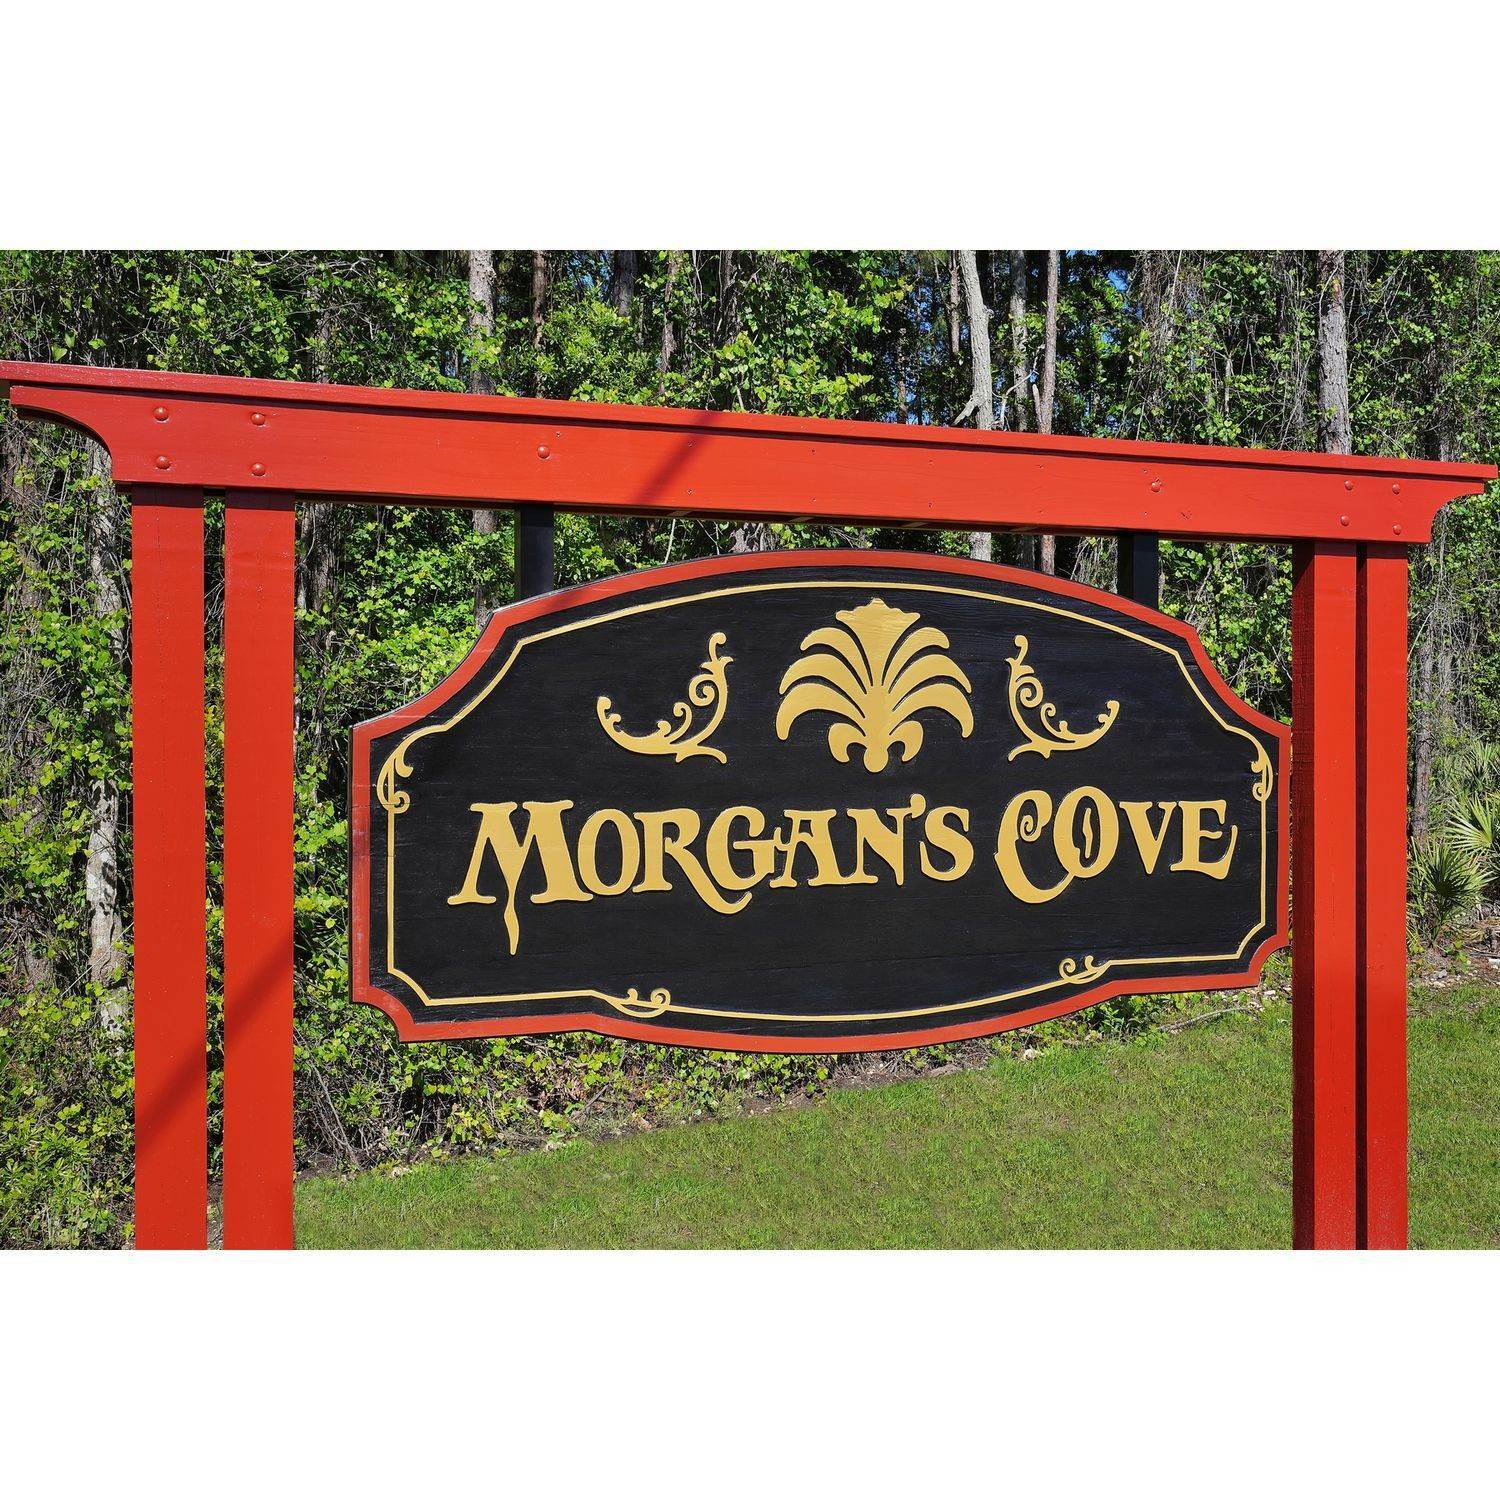 2. Morgan's Cove κτίριο σε 35 Mango Grove Court, St. Augustine, FL 32084